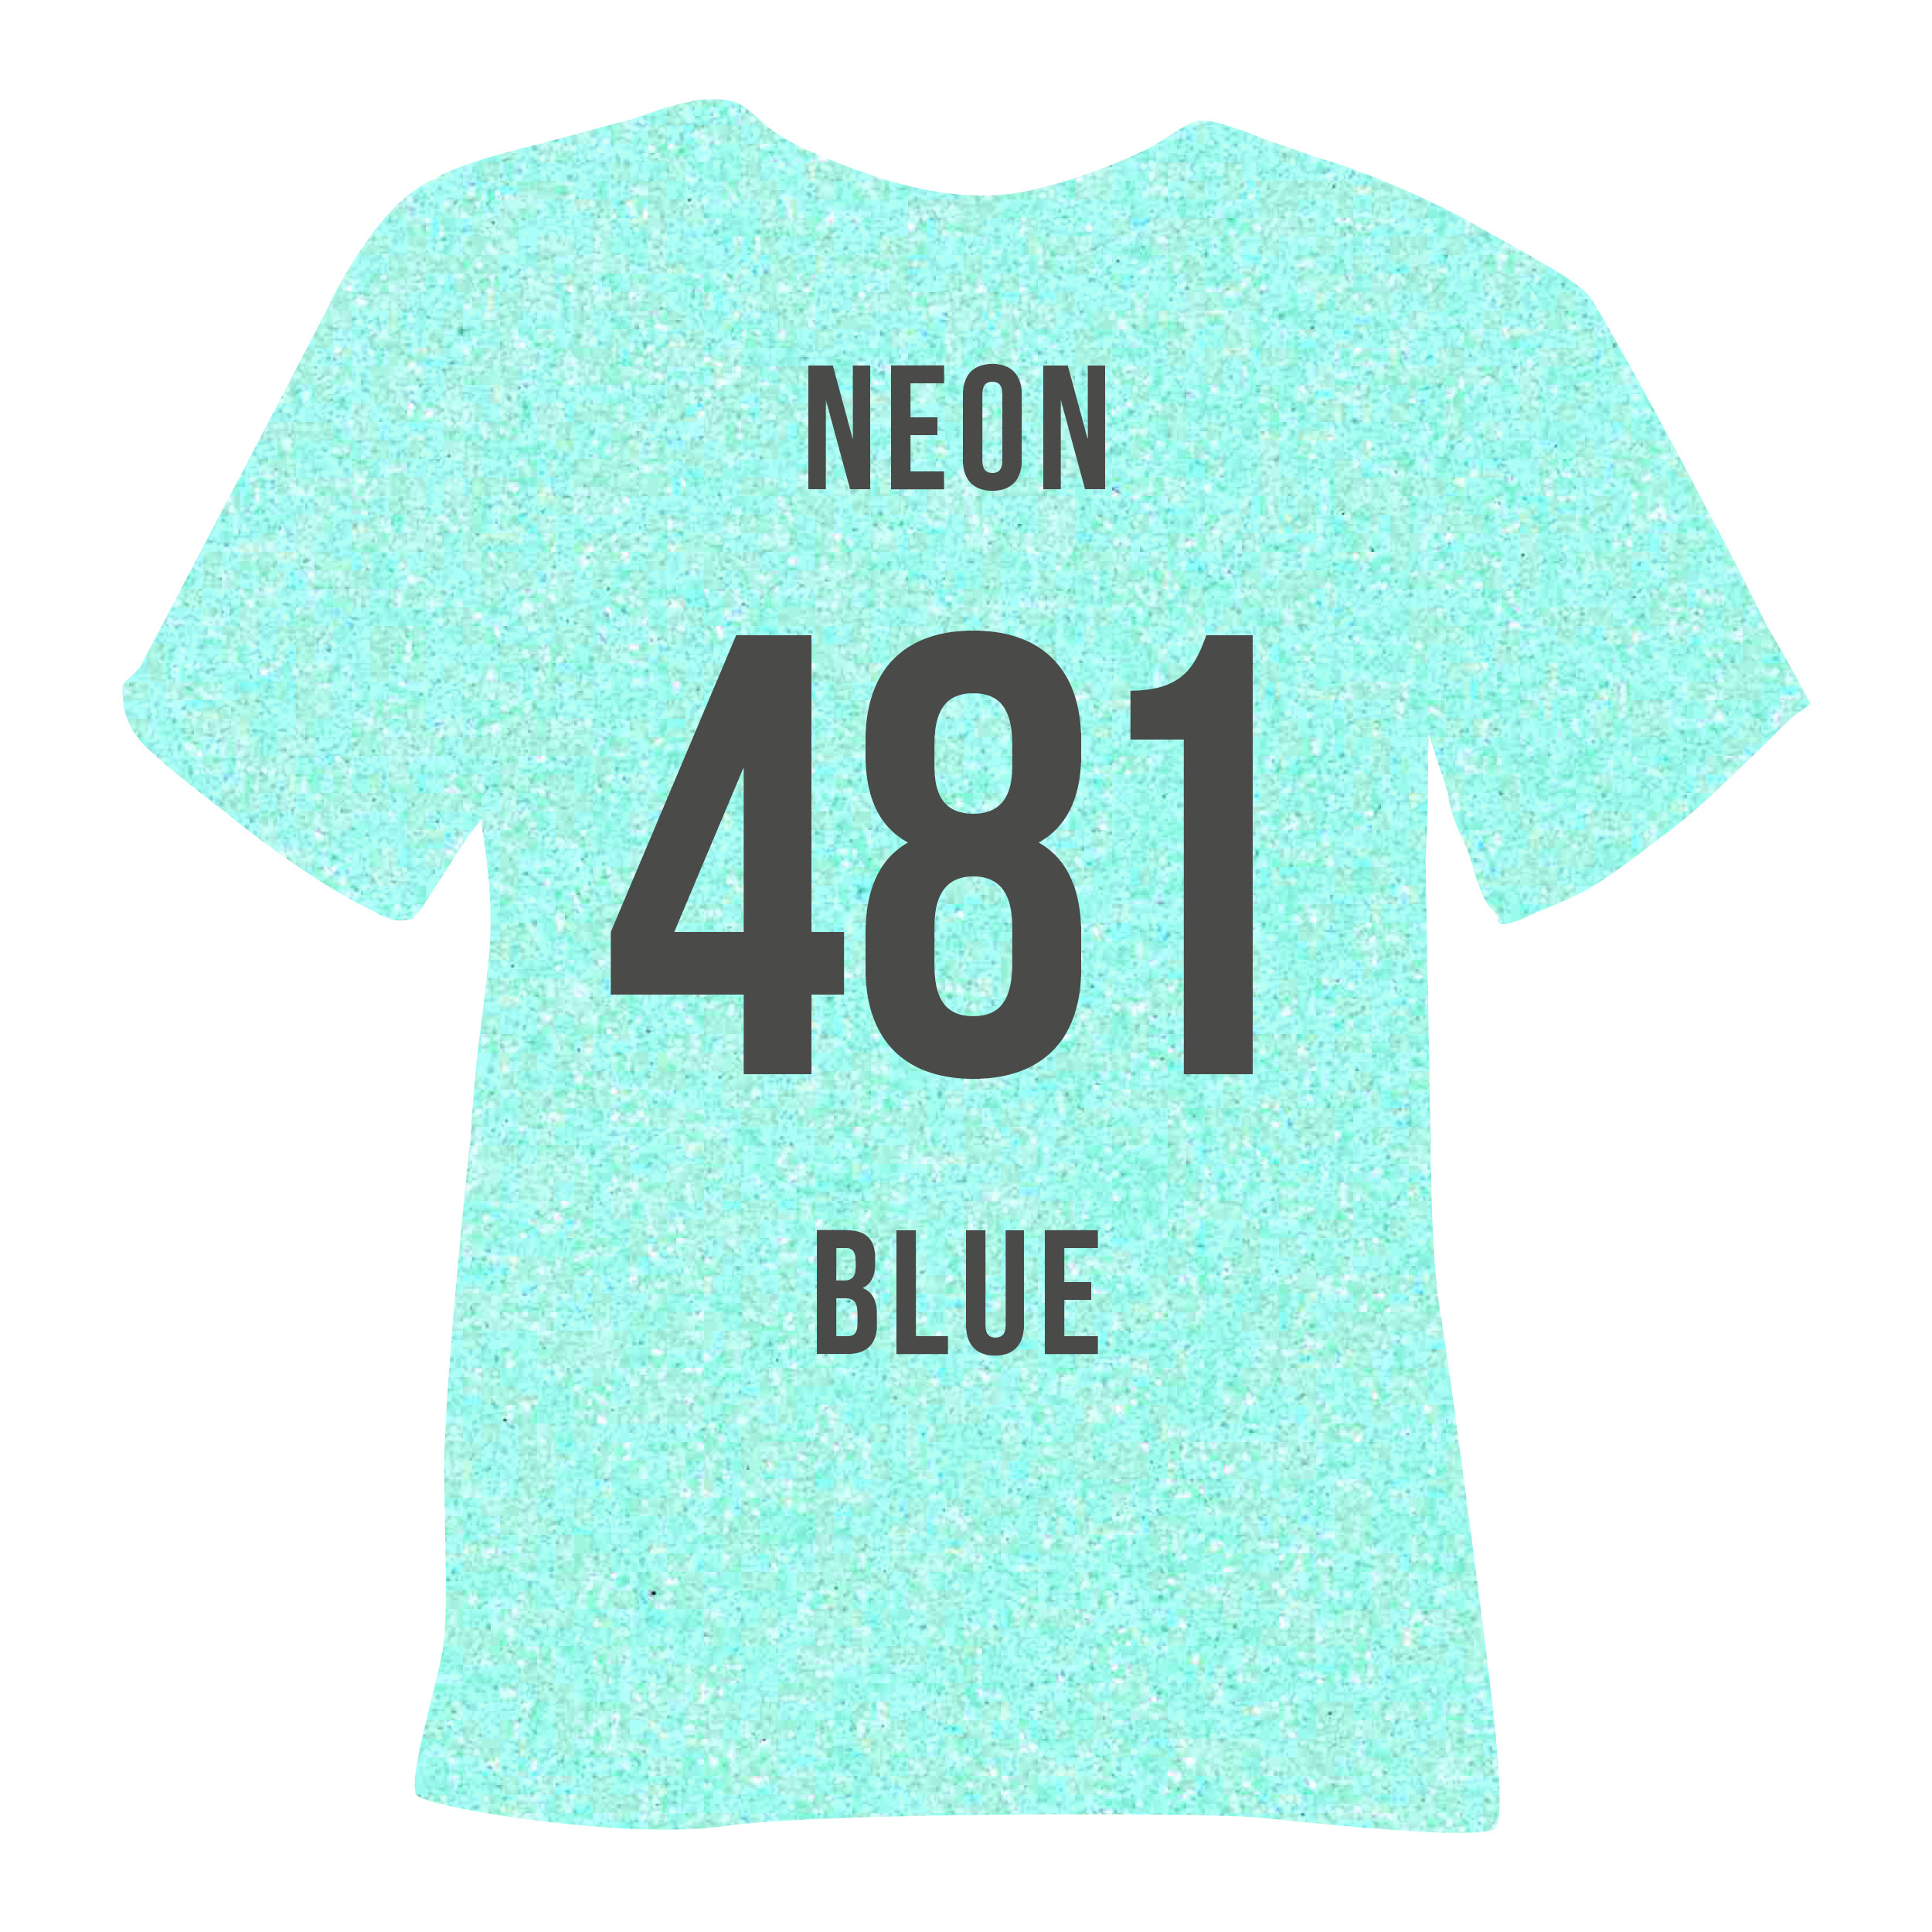 481 NEON BLUE